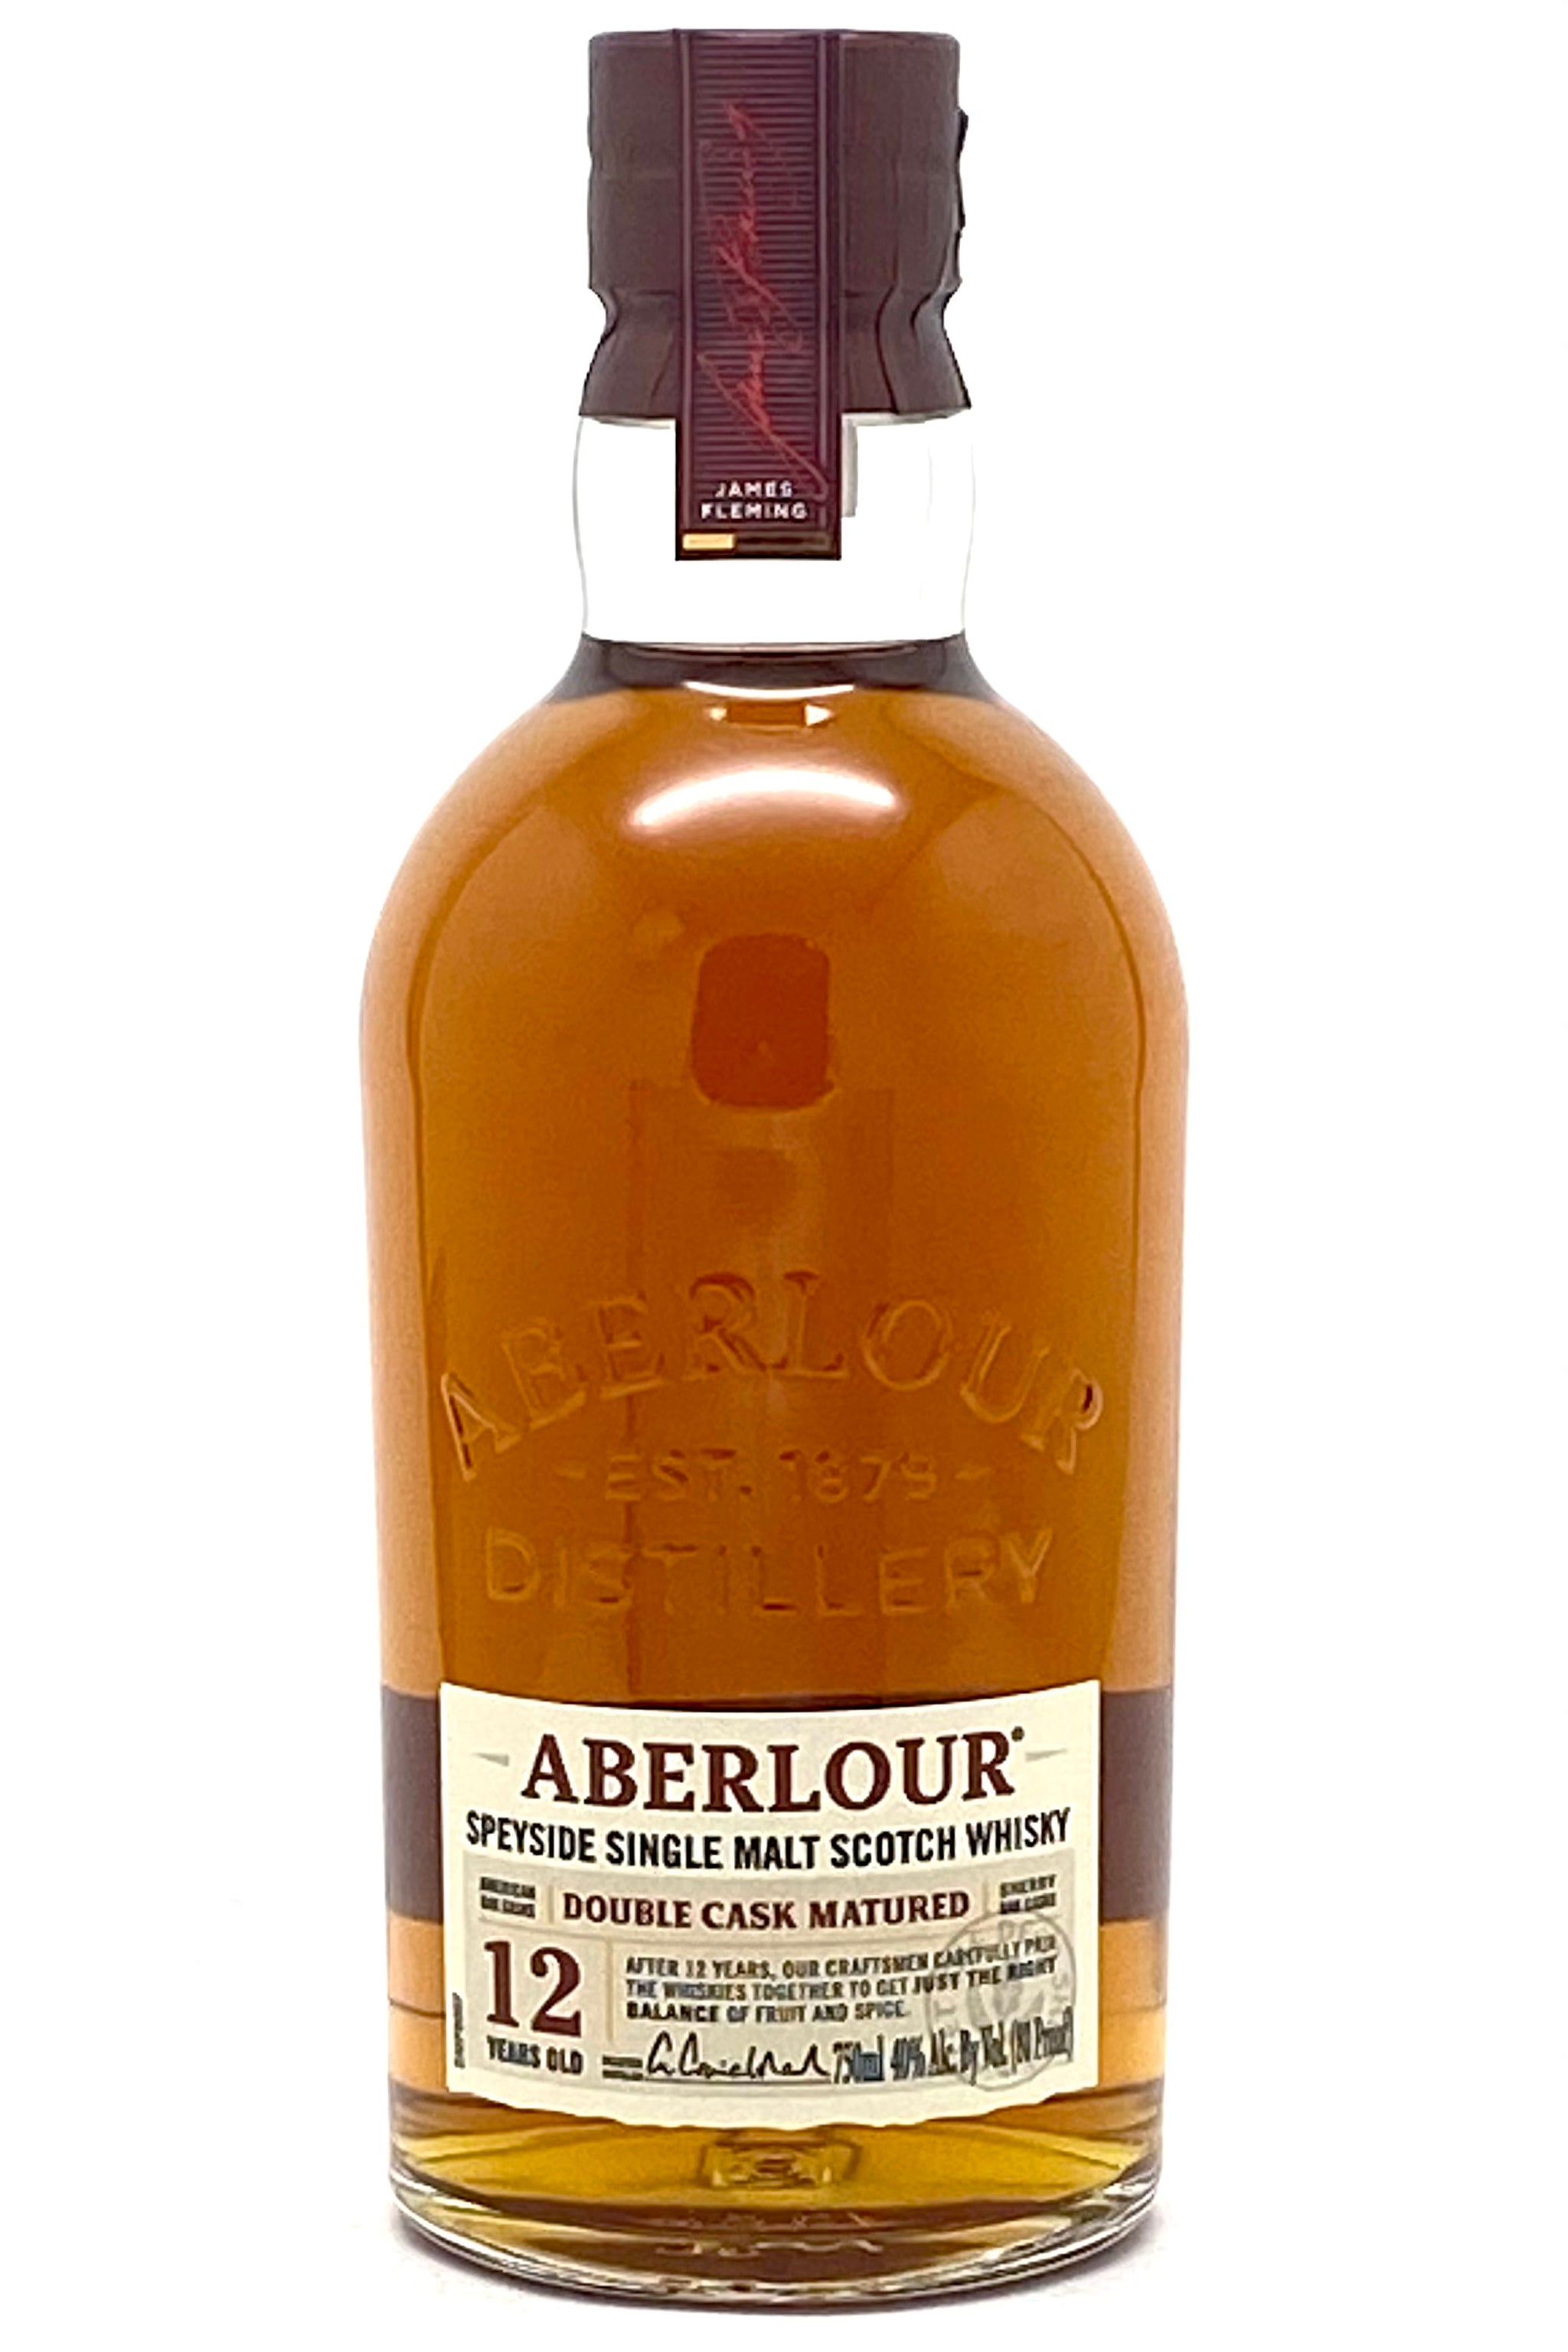 Single Speyside Cask Buy 12 Double Whisky Online Scotch Aberlour Matured Malt Year